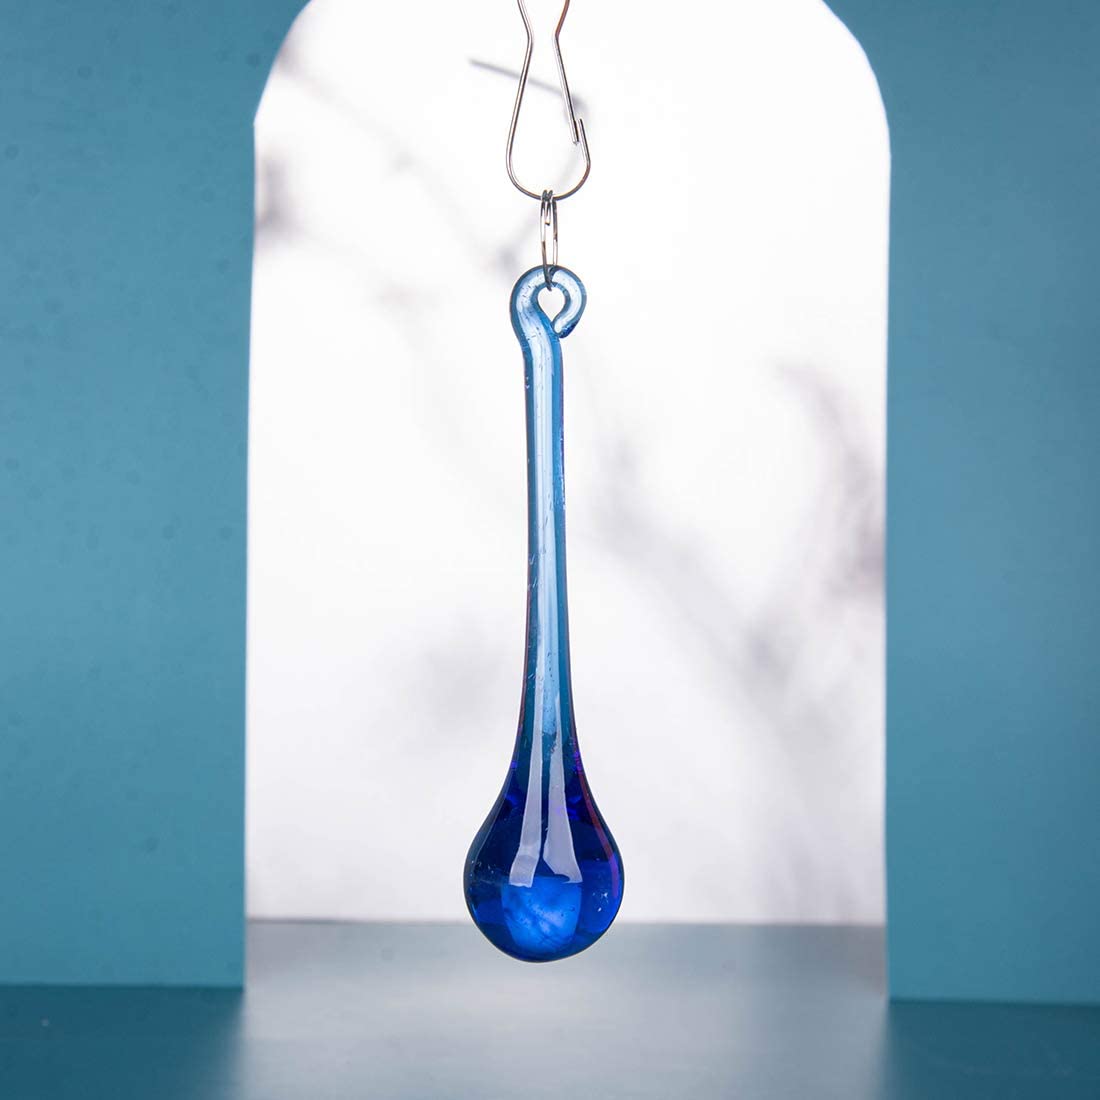 Blue Crystal Teardrop Shaped Pendant Ornaments for Chandelier (20 pcs)